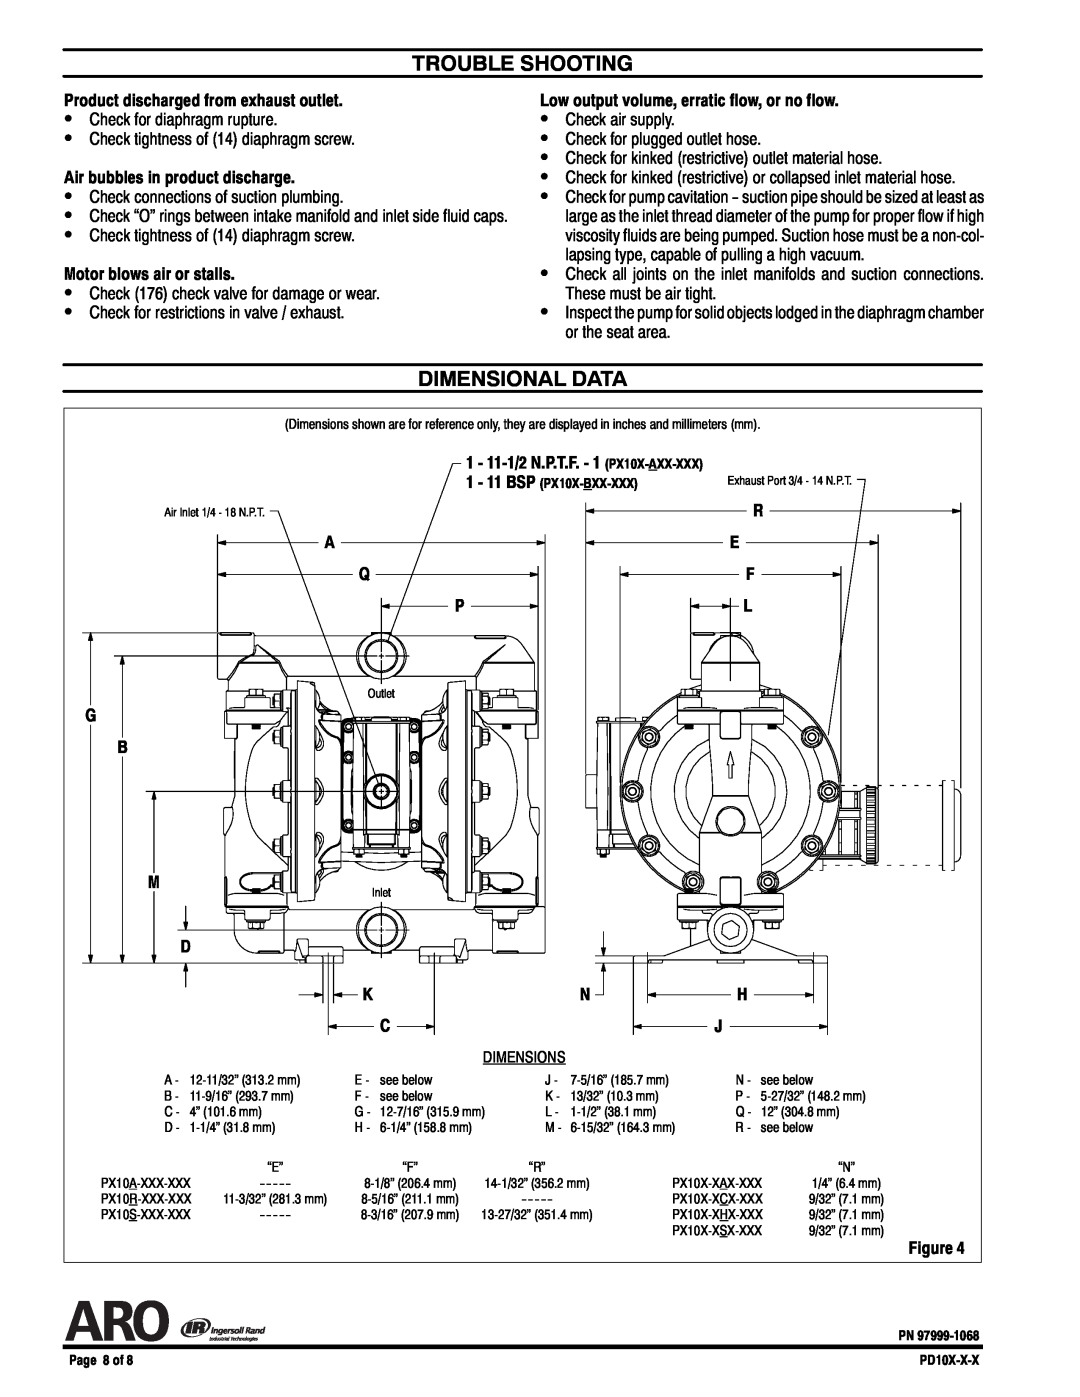 Ingersoll-Rand PD10X-X-X, PE10X-X-X manual Trouble Shooting, Dimensional Data 